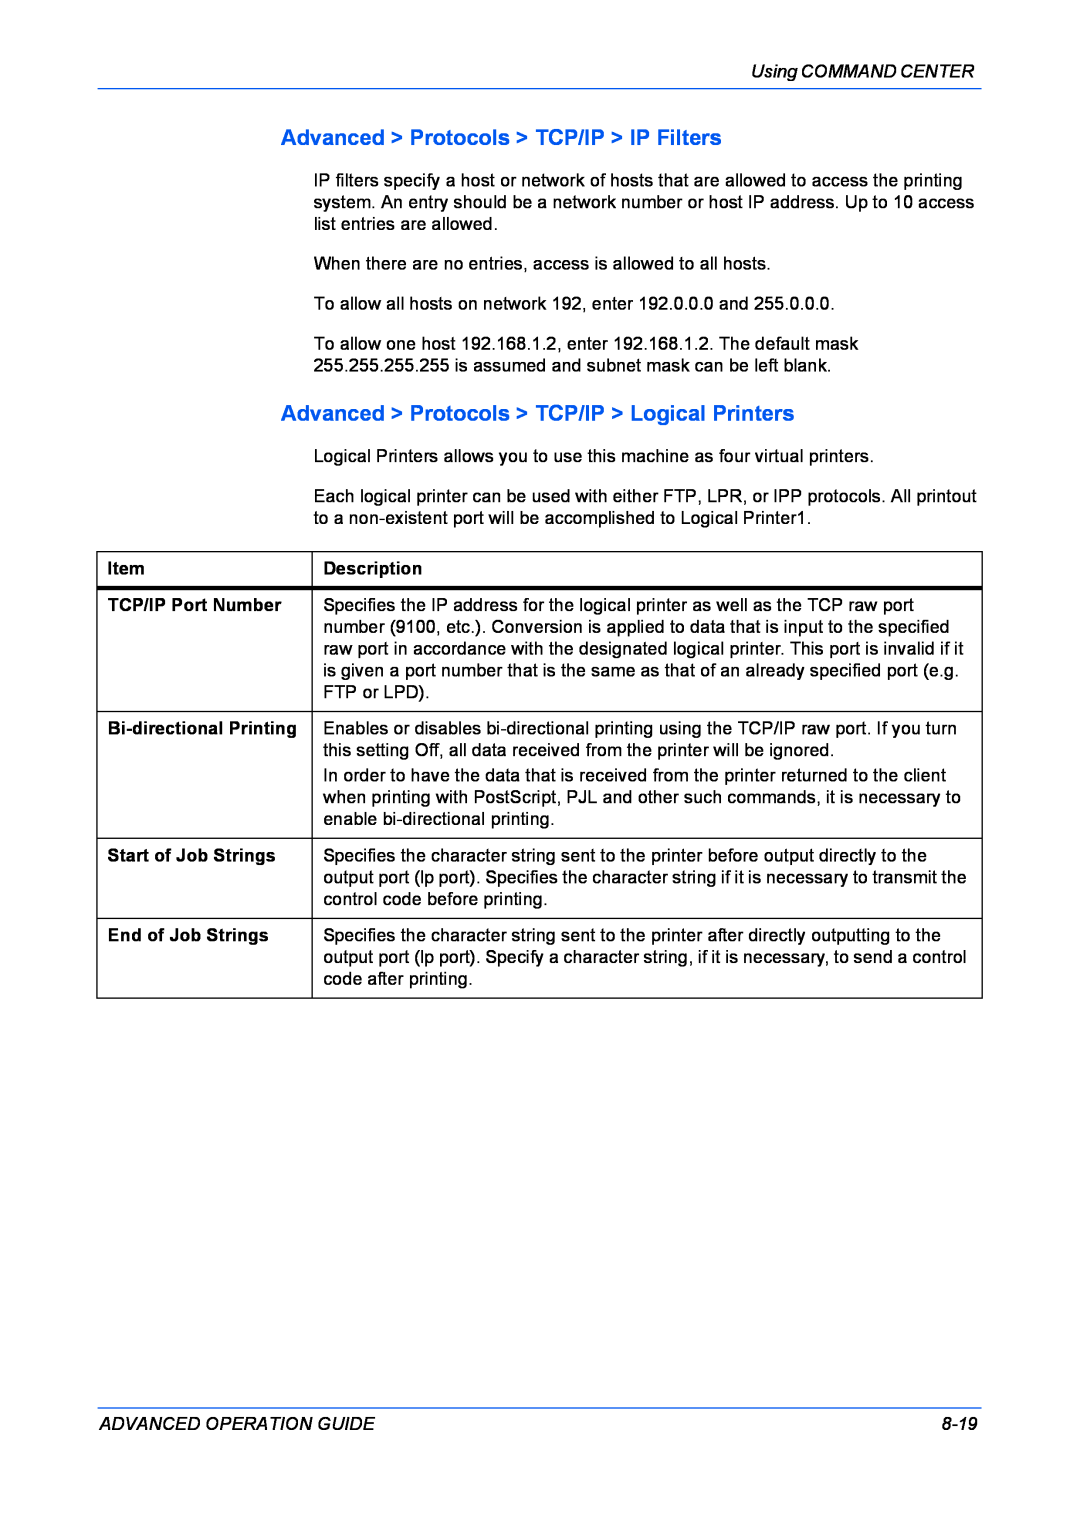 Kyocera KM-1820 manual Advanced Protocols TCP/IP IP Filters, Advanced Protocols TCP/IP Logical Printers 